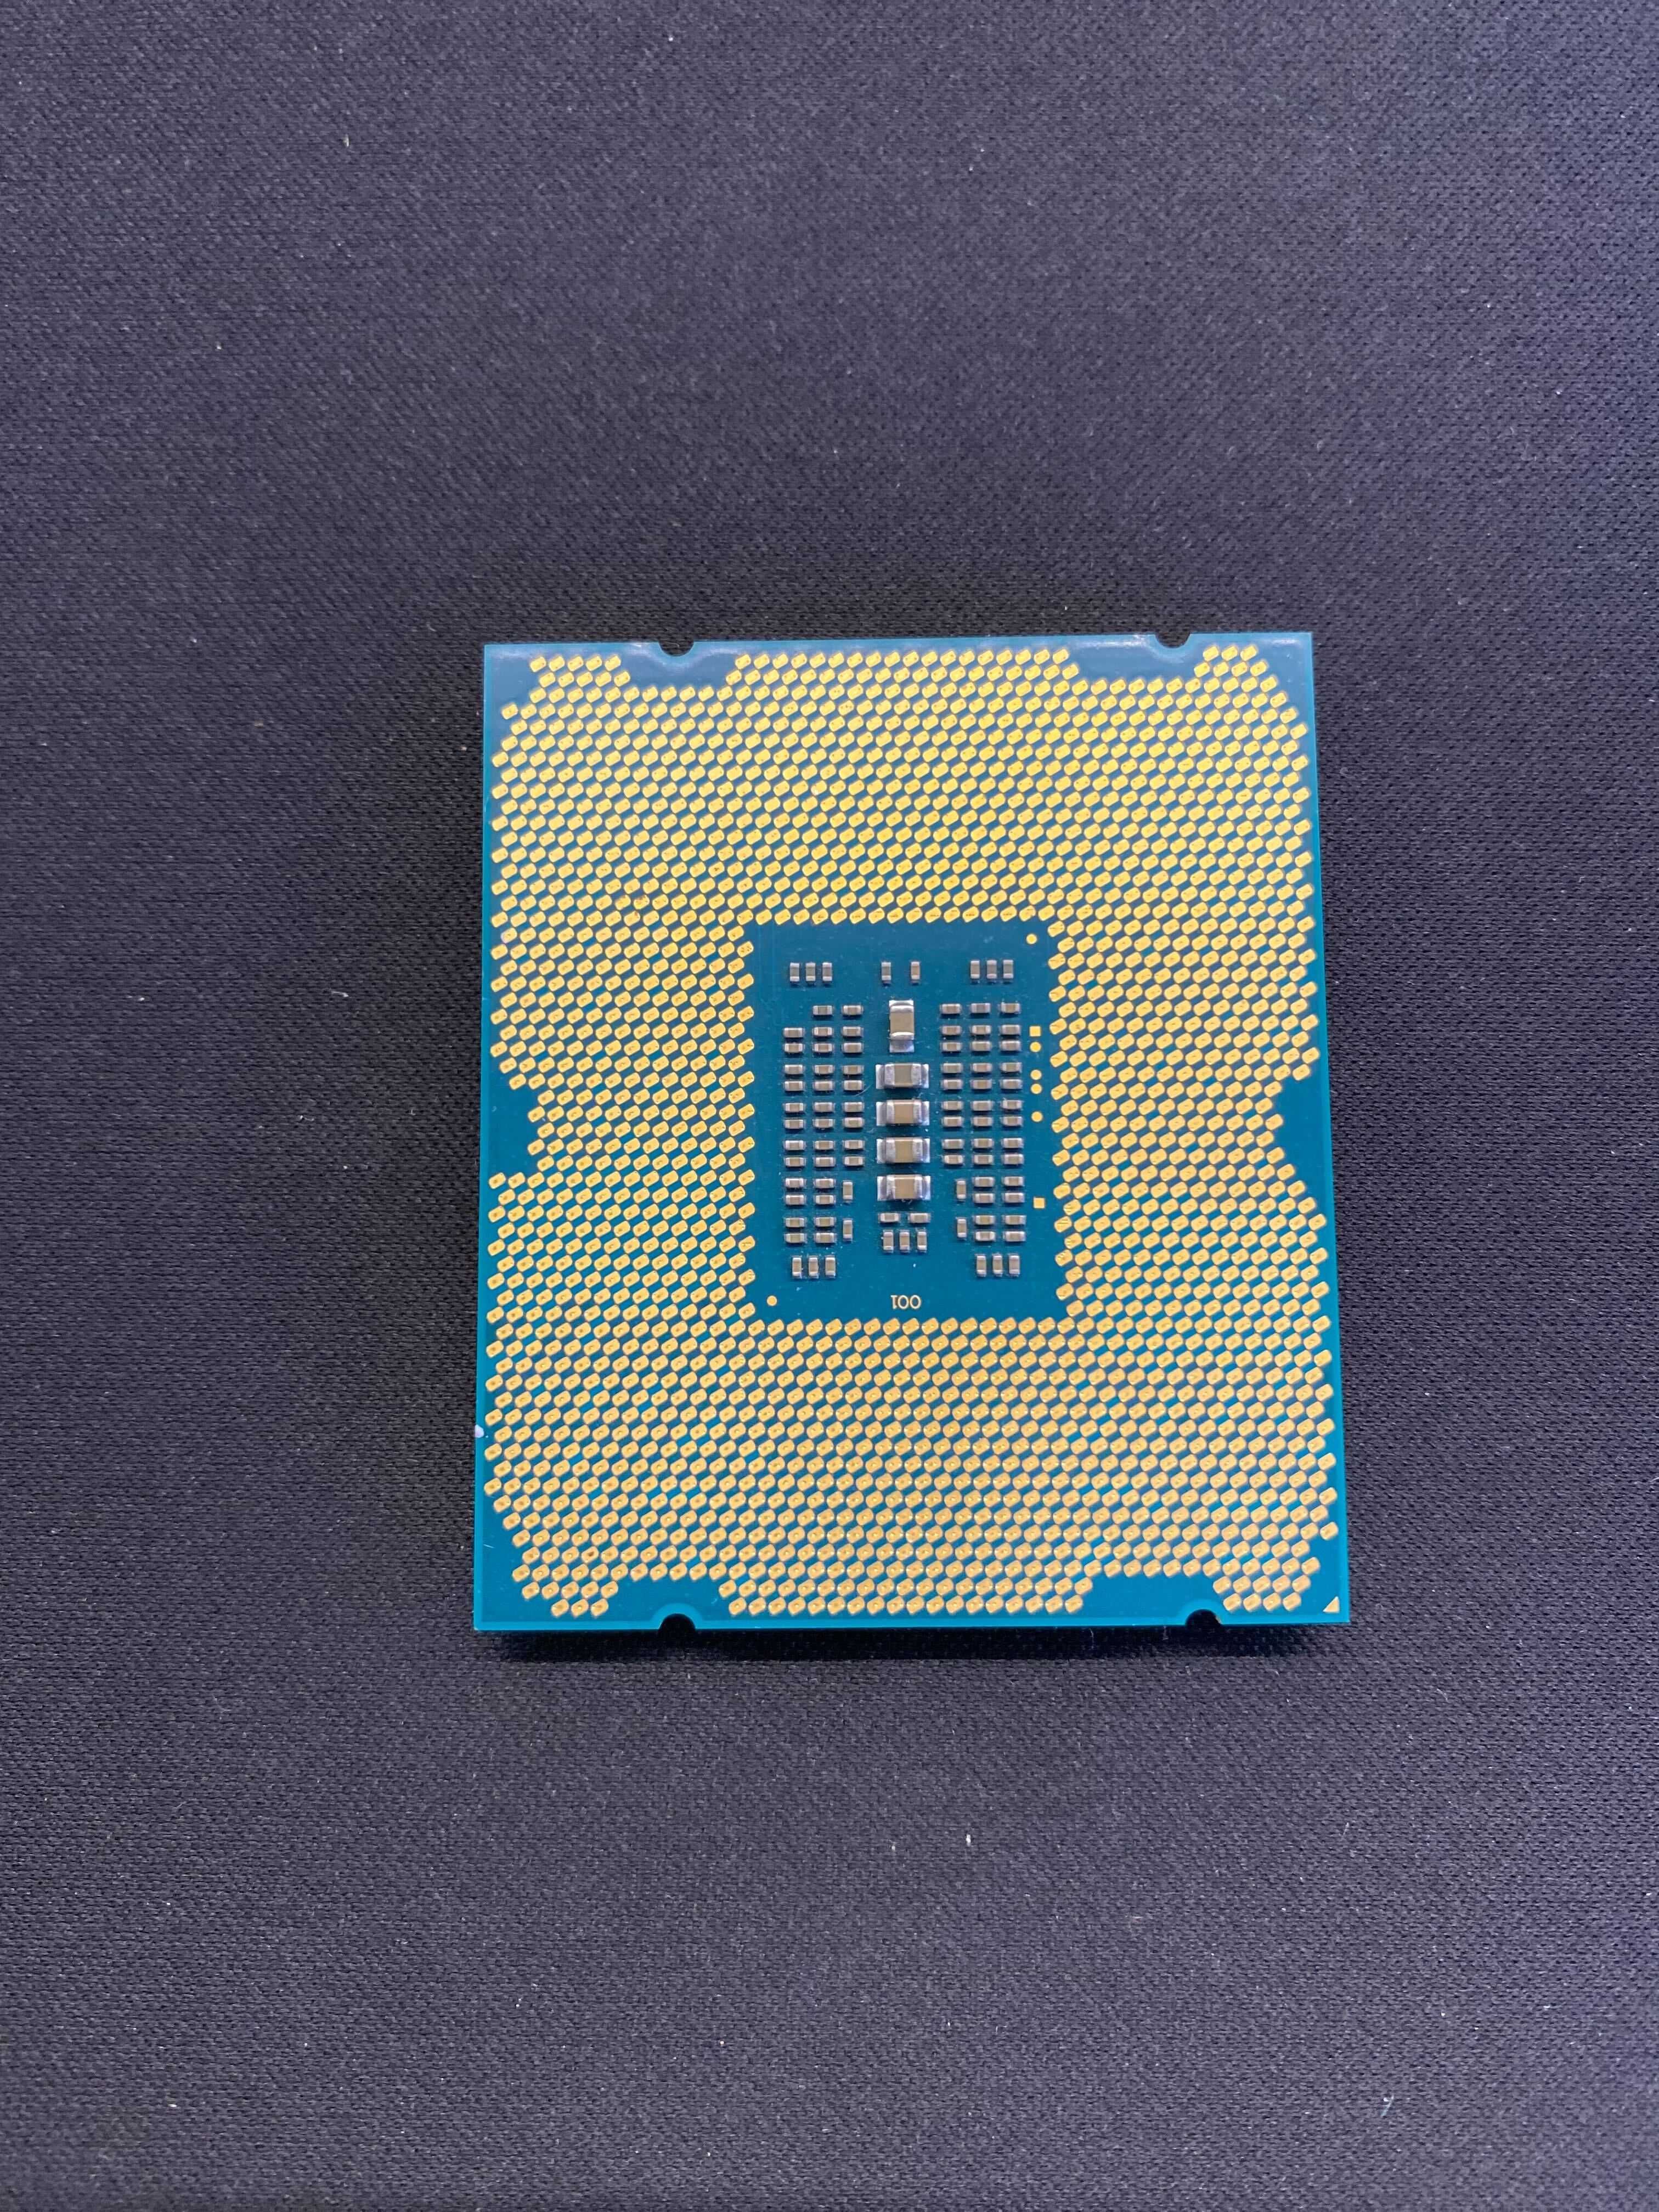 Intel Xeon Processor E5-1620 v2 / 3.70 - 3.9GHz / 10MB / 4 cores /130W